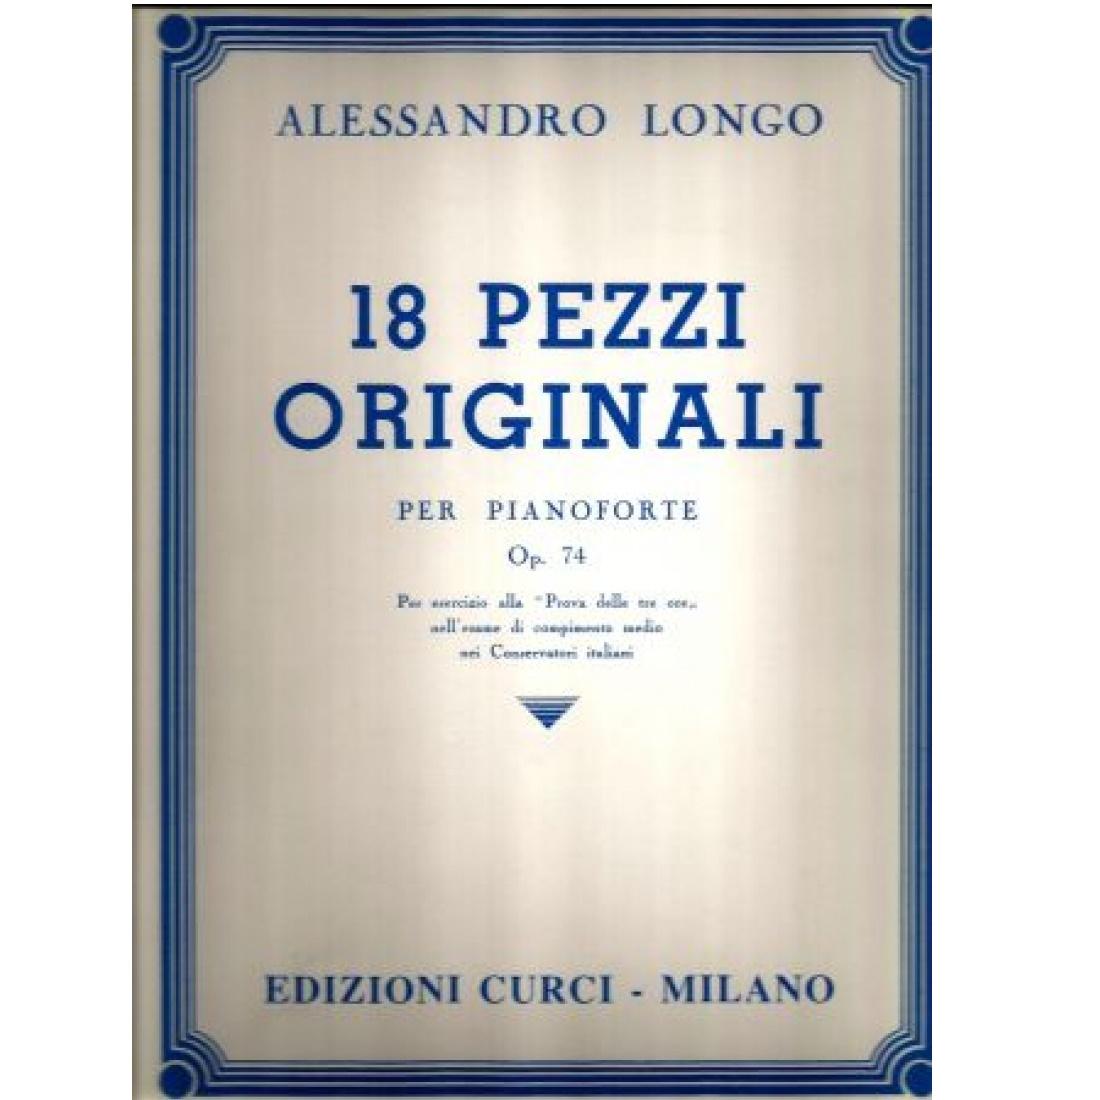 Longo 18 PEZZI ORIGINALI per pianoforte Op. 74 Edizioni Curci Milano 